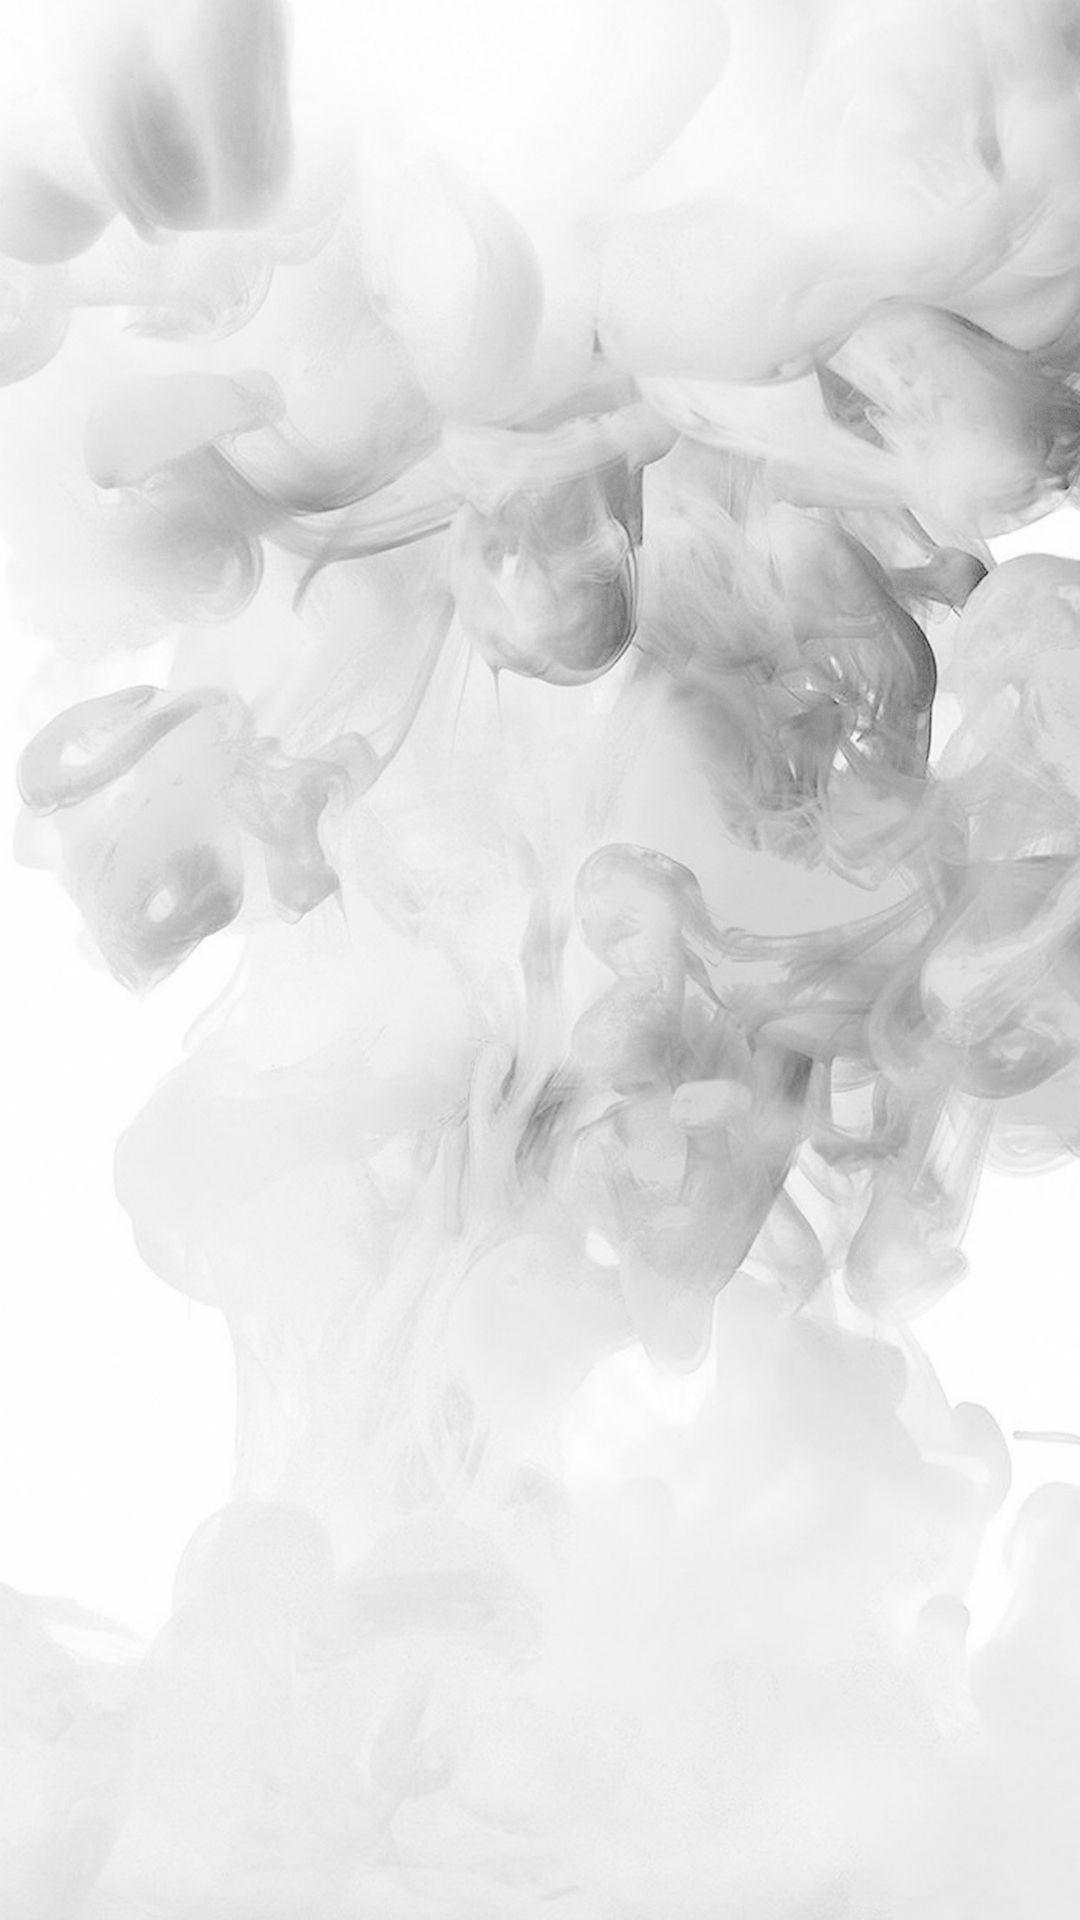 Smoke White Abstract Fog Art Illust iPhone 6 Wallpaper